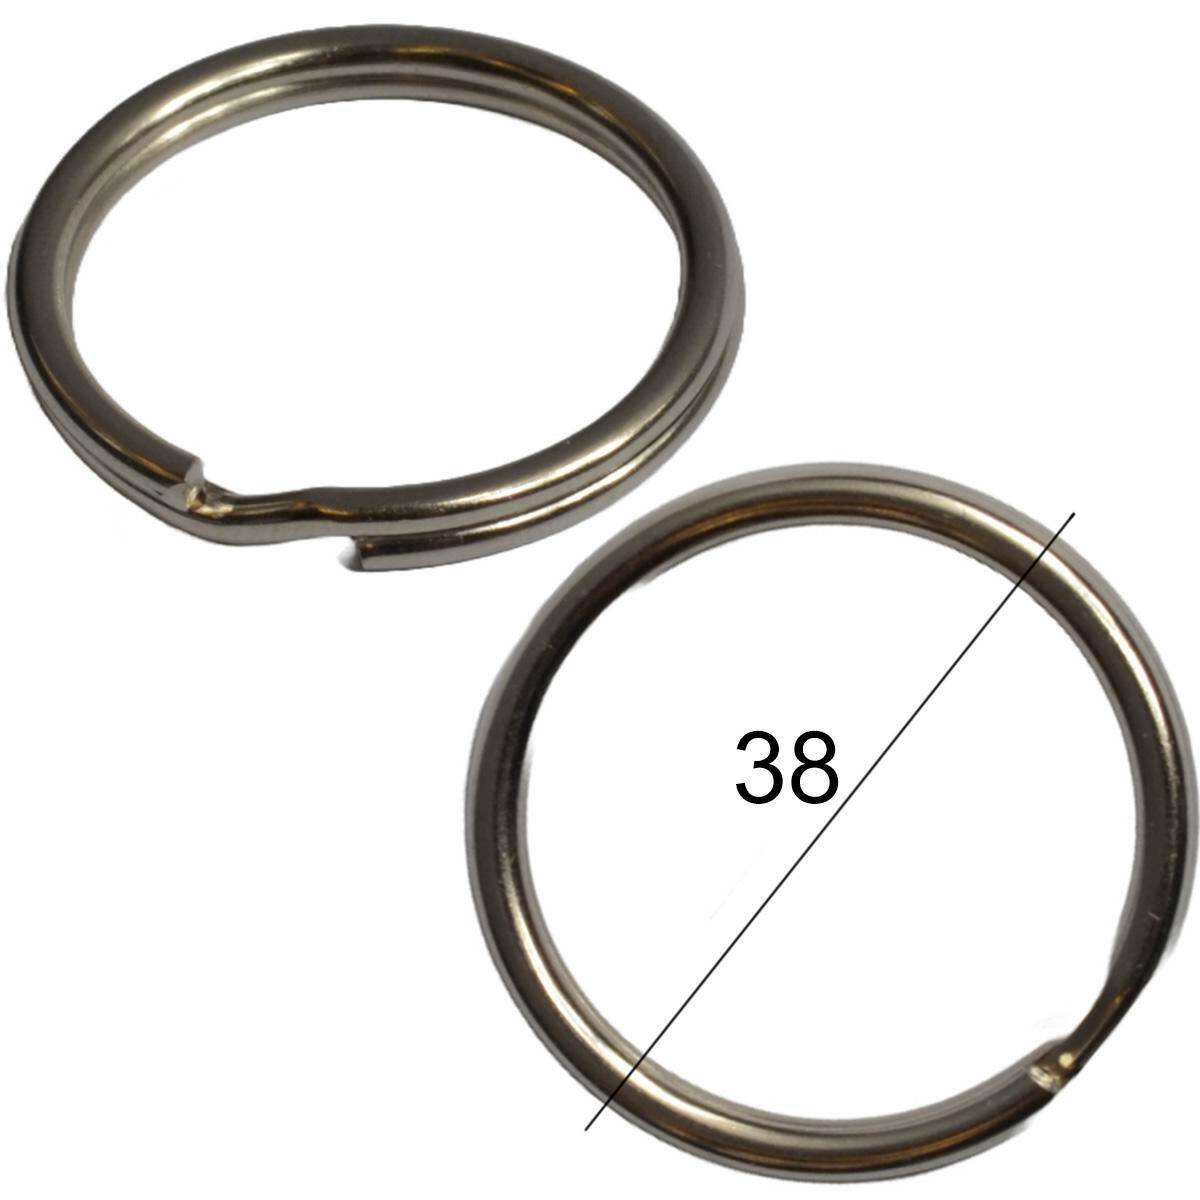 Key rings - 38 mm